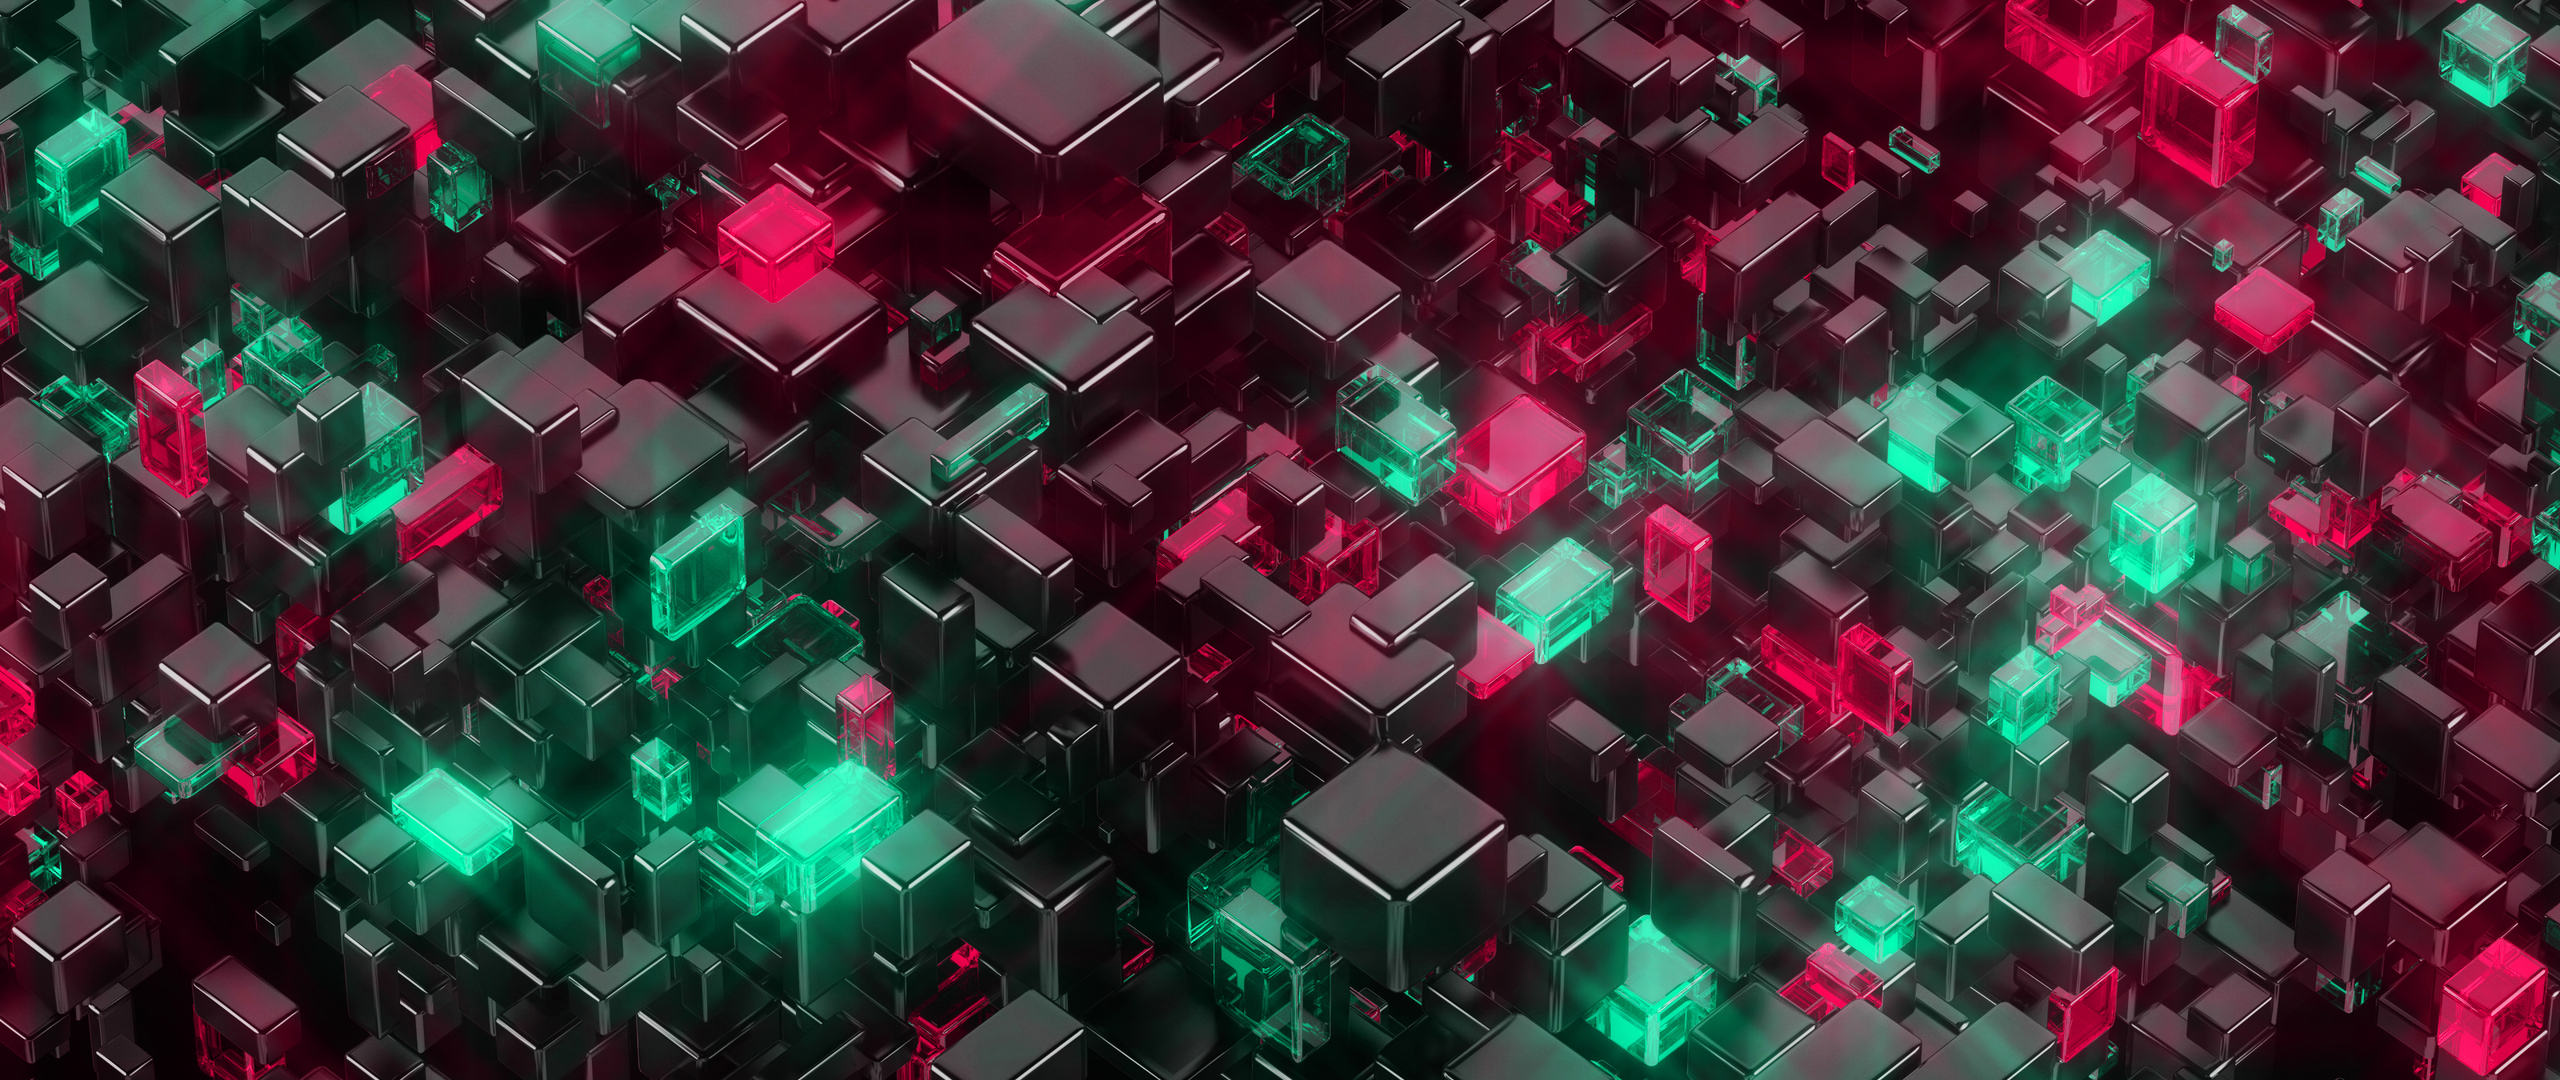 glowing-cubes-4k-yy-2560x1080.jpg